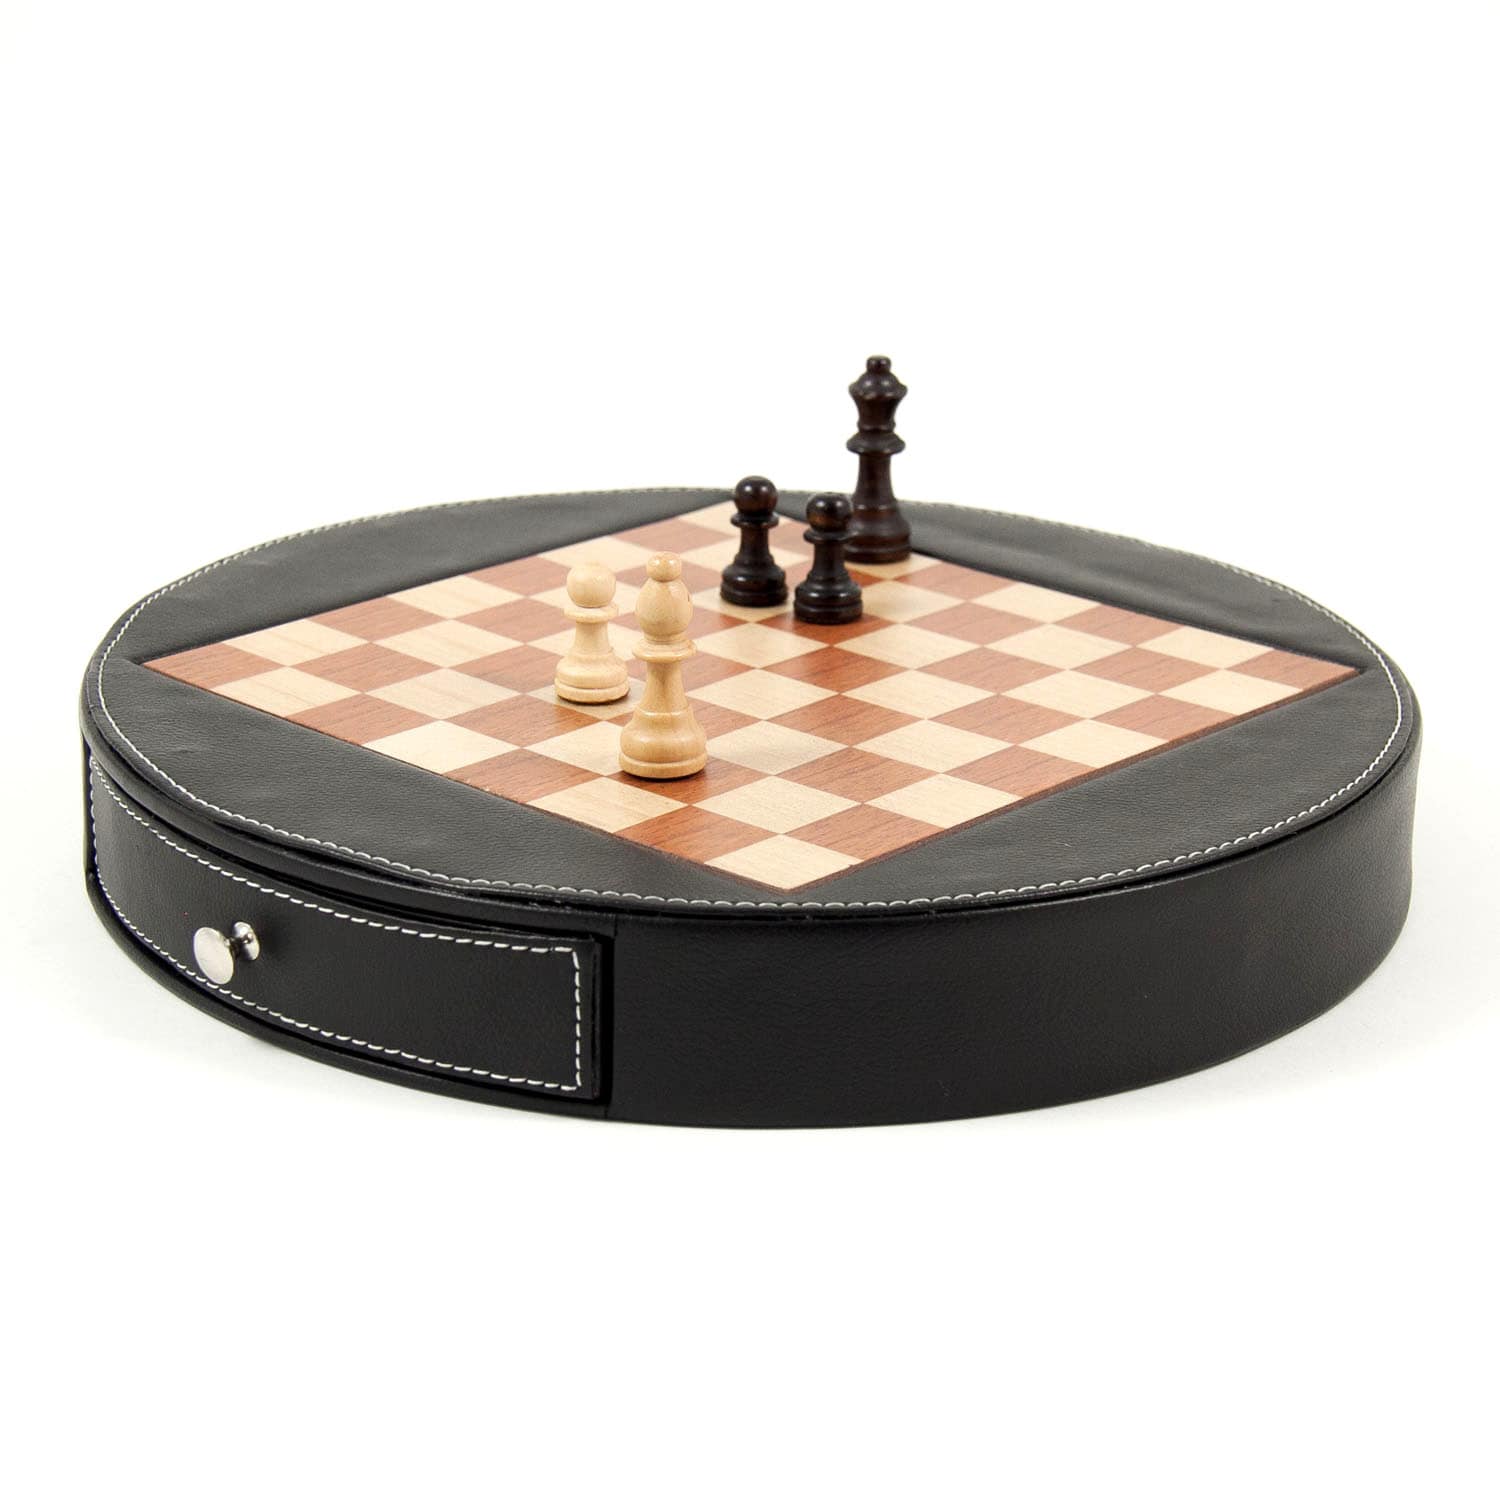 Bey-Berk International G545 Leather & Wood Chess Set, Black - image 2 of 4